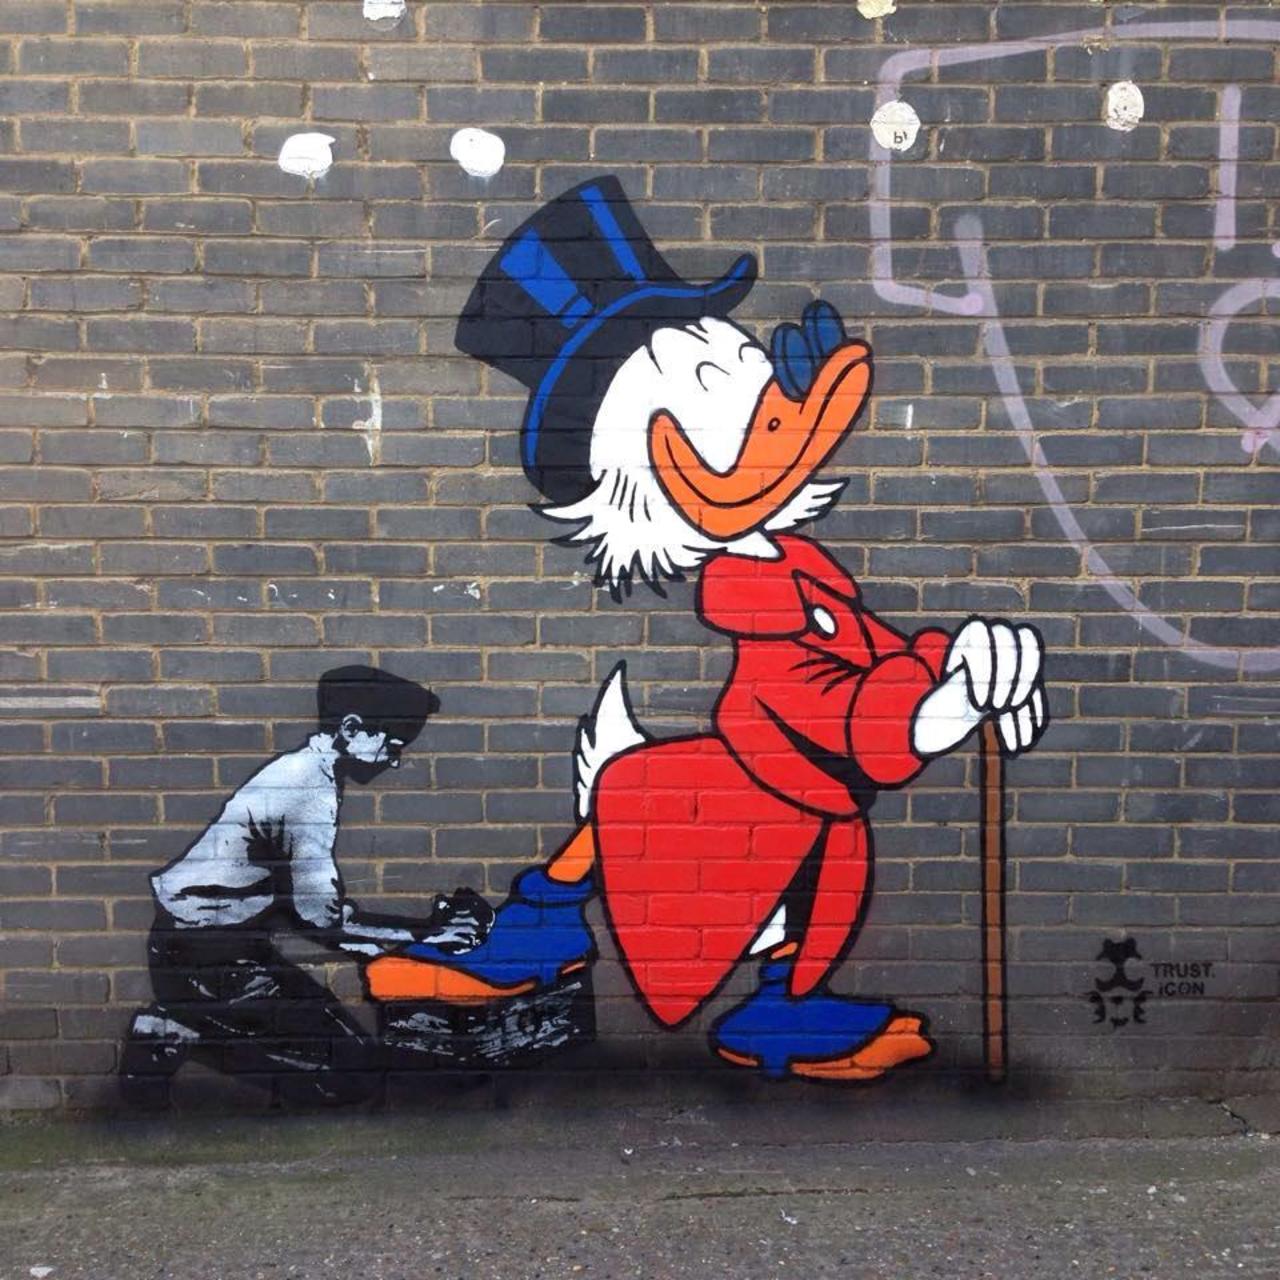 'Shine Box' 
New Street Art by iCON in Bethnal Green, London 

#art #arte #graffiti #streetart http://t.co/lCKAag216c